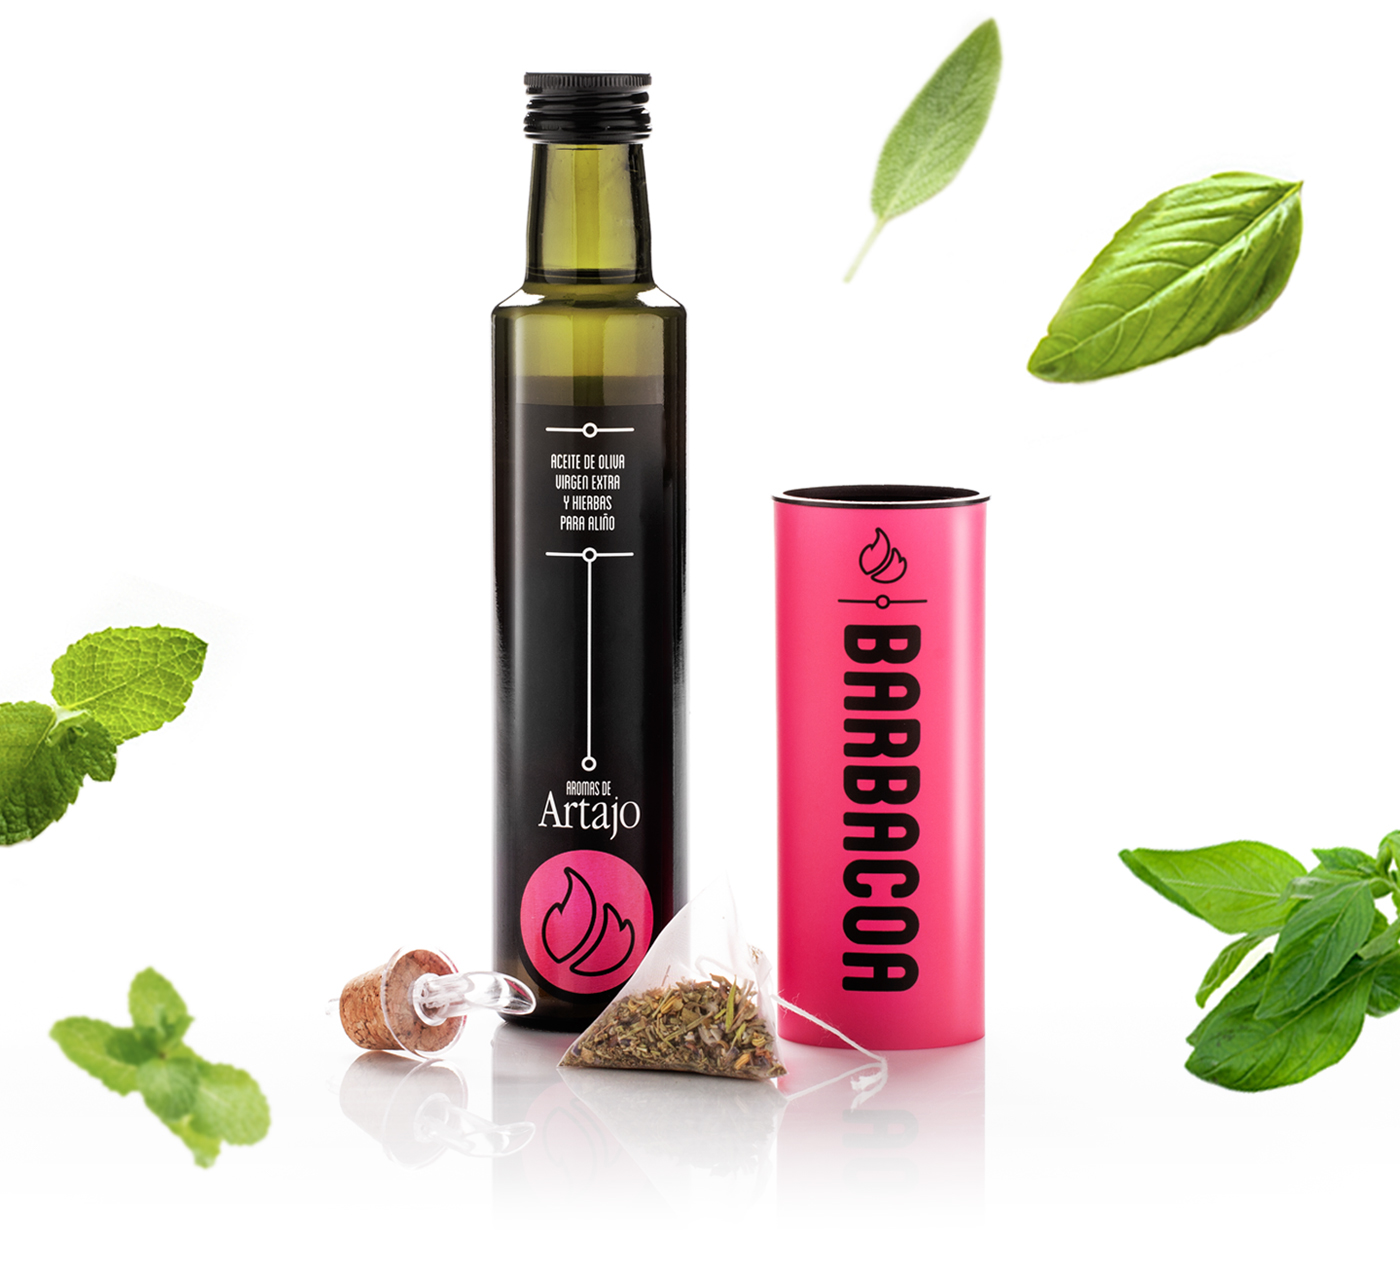 mimetica Artajo aromas aceite oil oliva olive Basil cooking oregano herbs spanish spain mediterranean Health